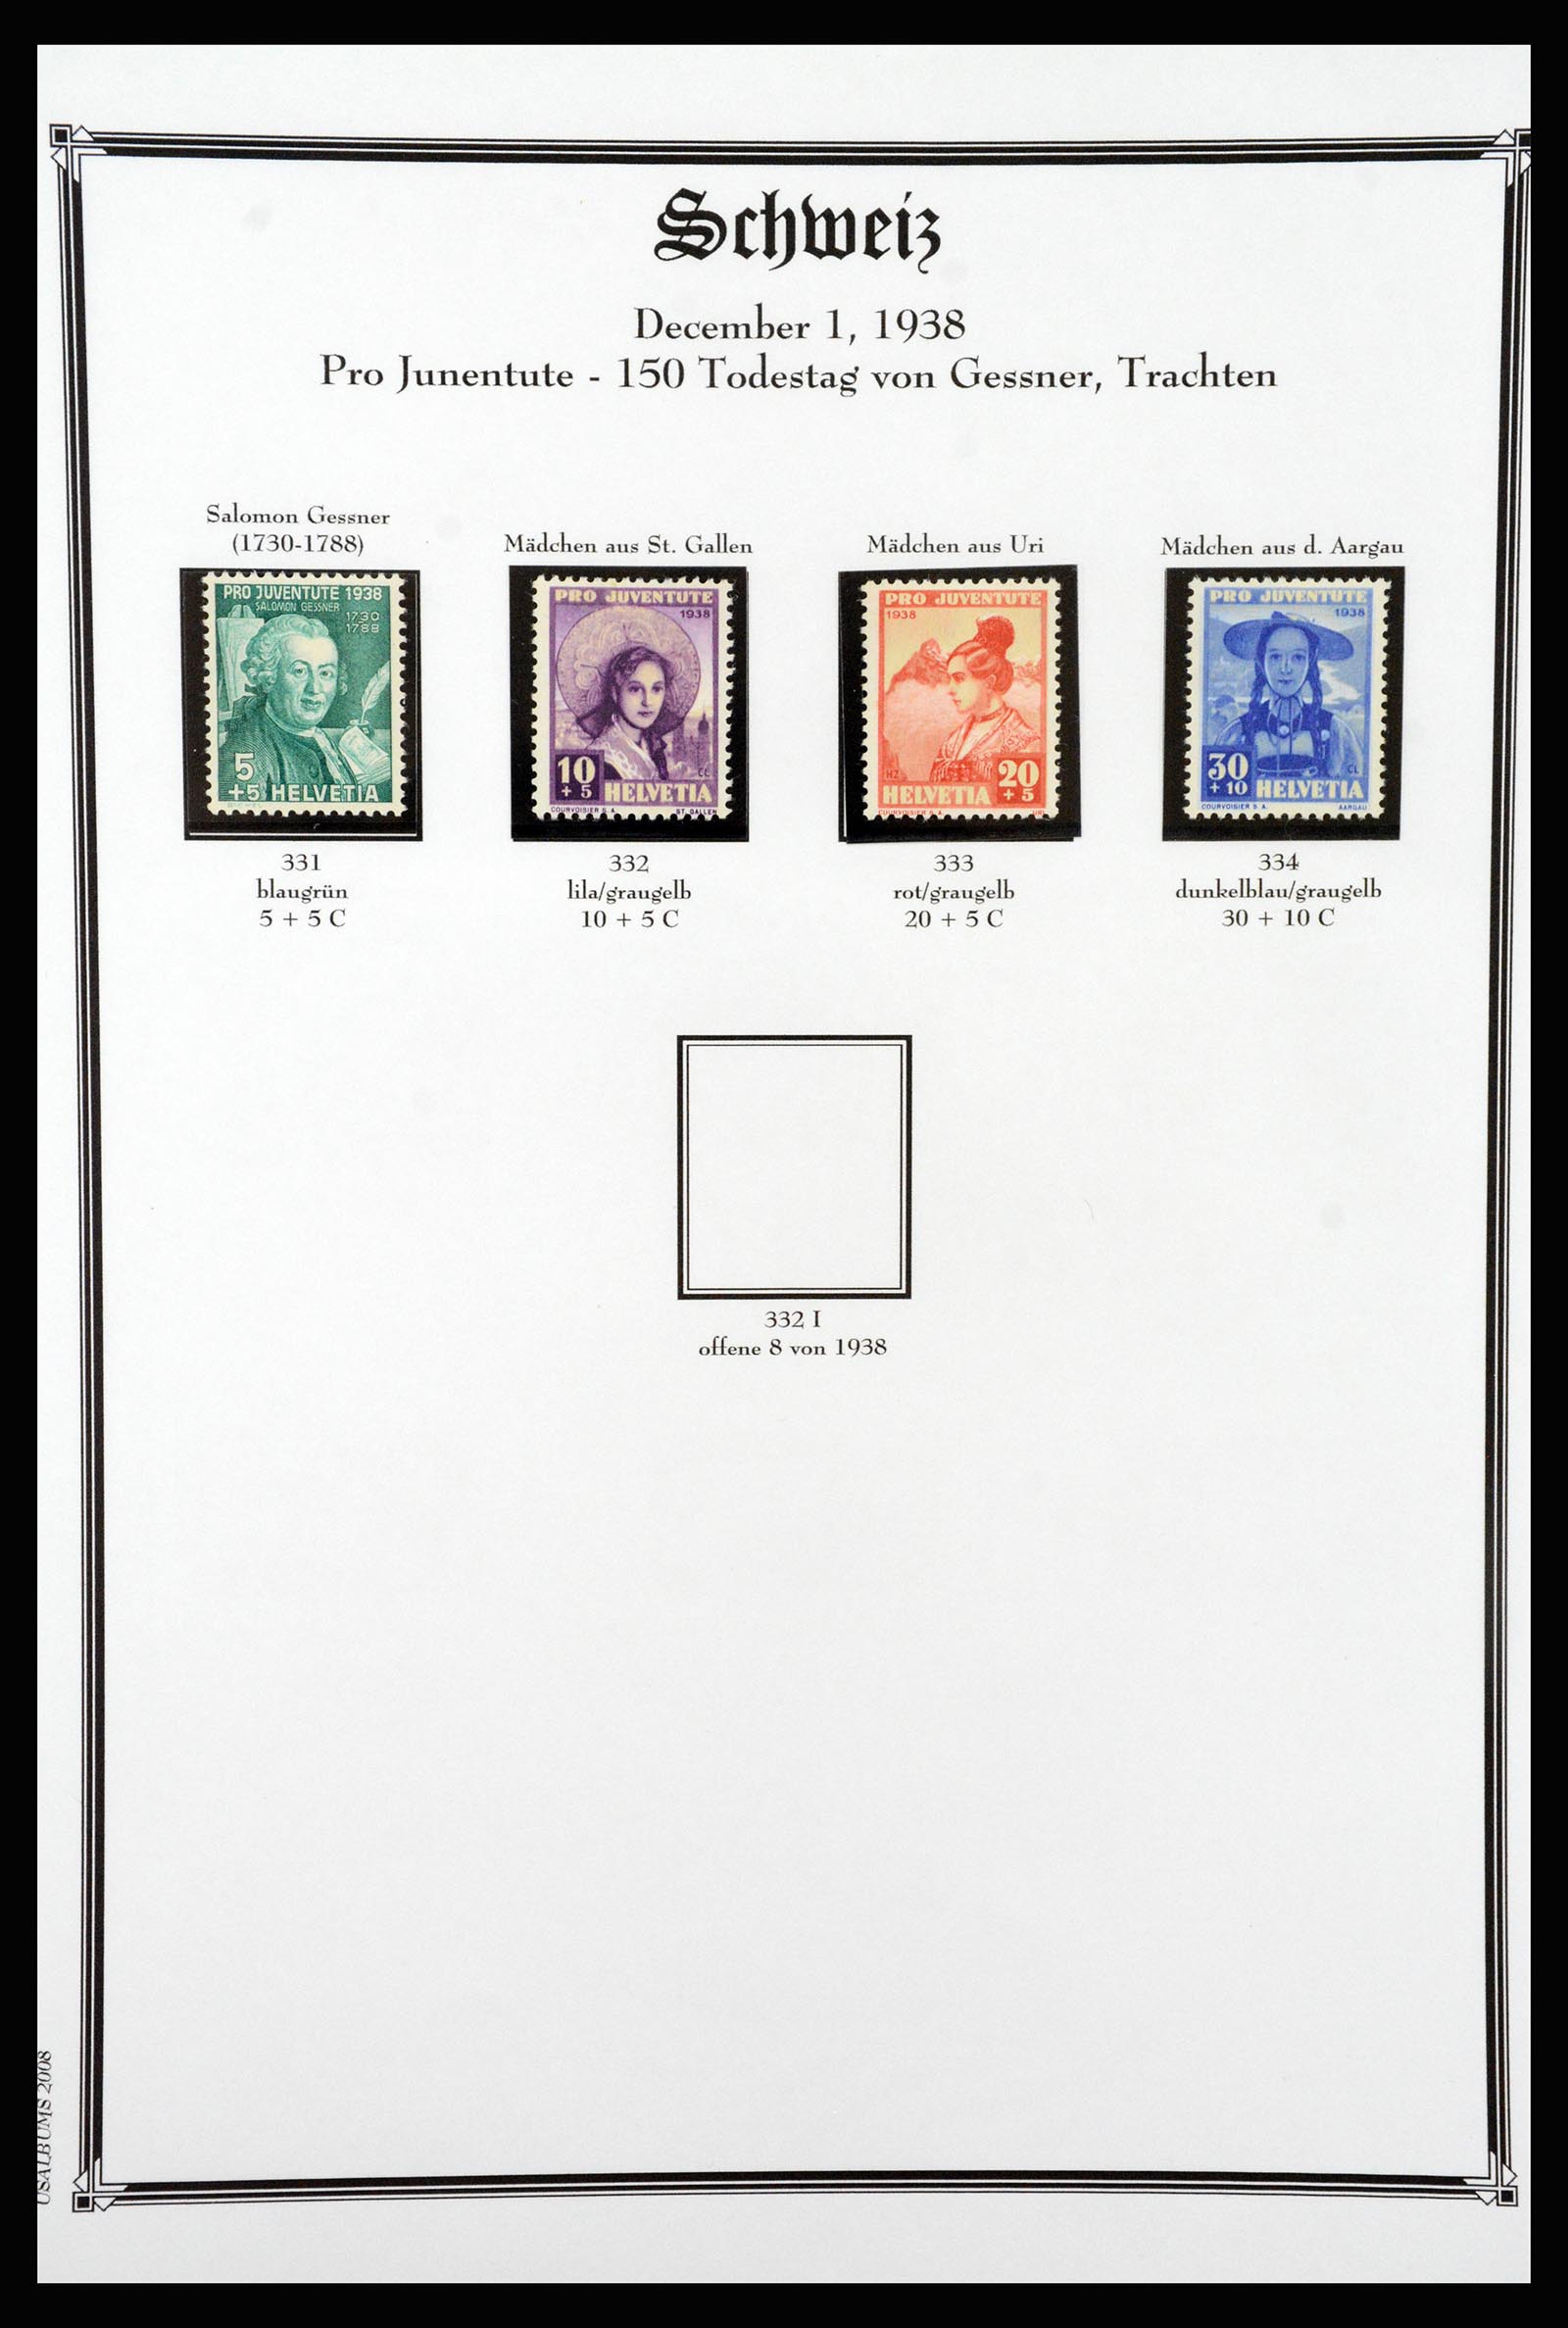 37159 065 - Stamp collection 37159 Switzerland 1862-2000.